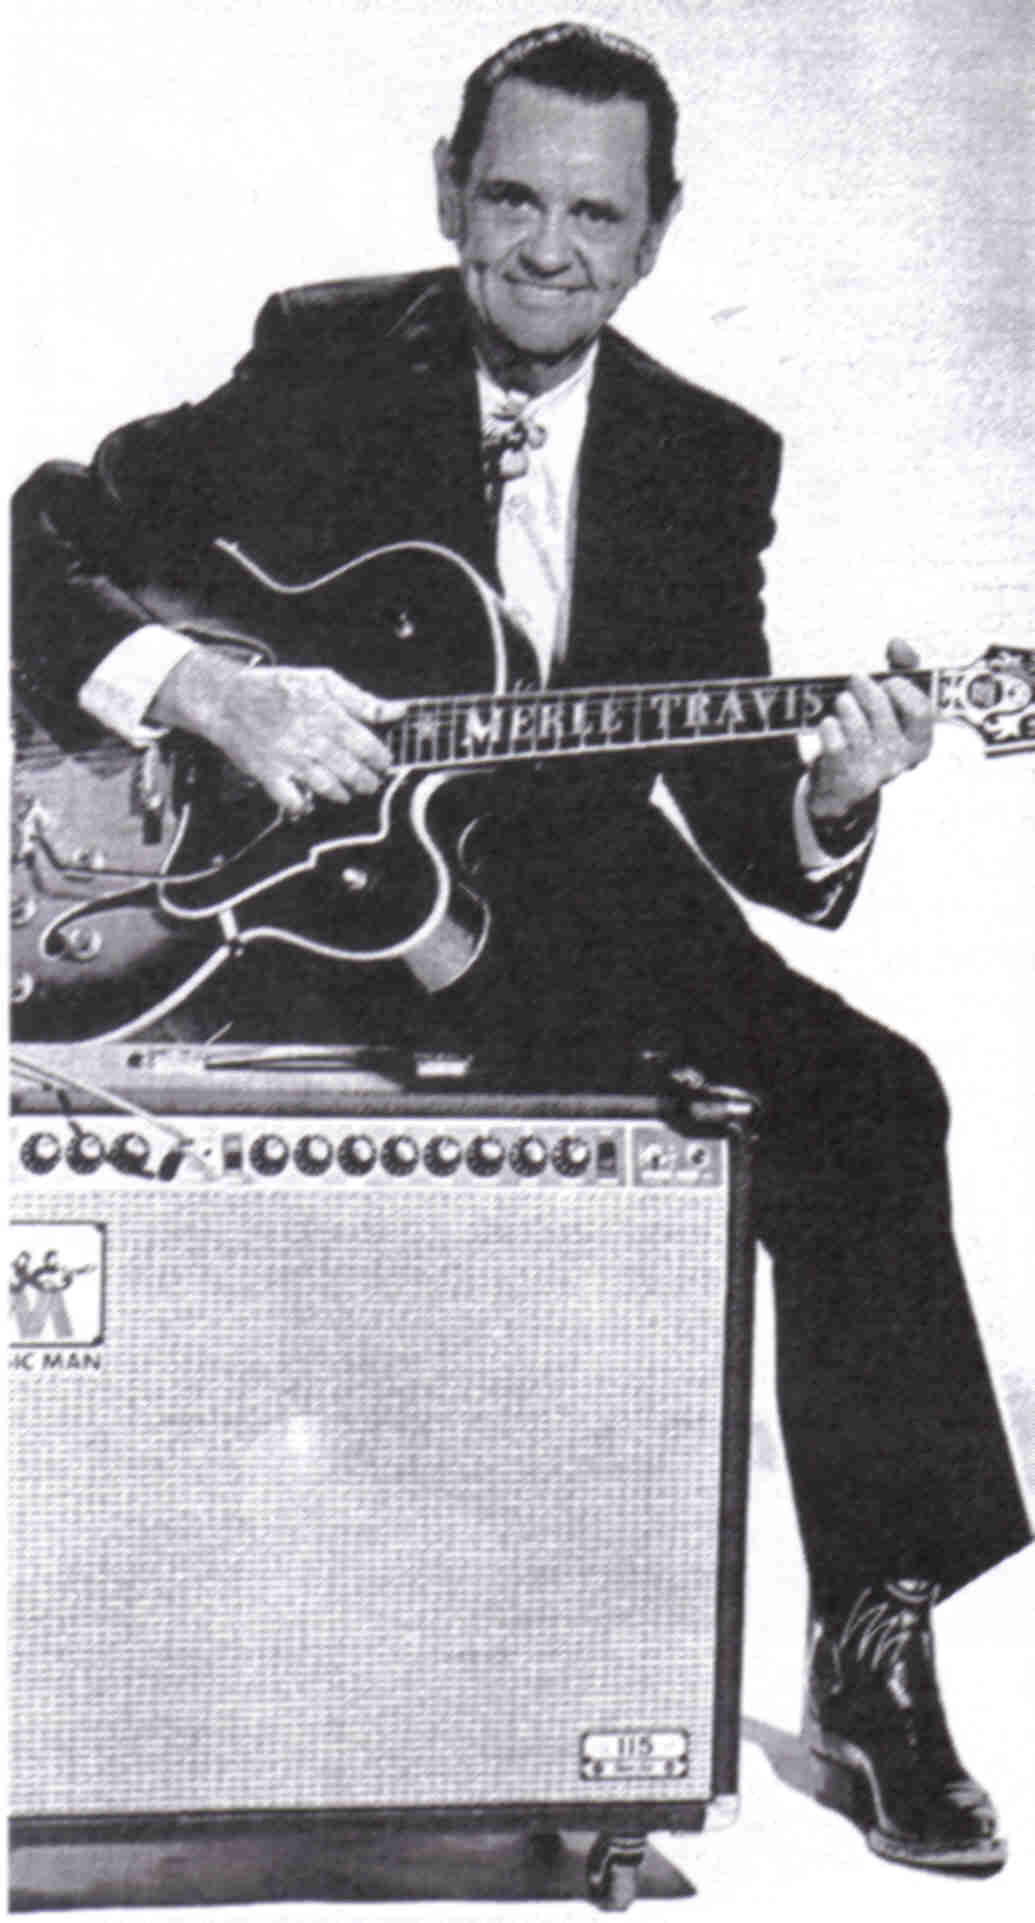 Merle Travis & his Musicman